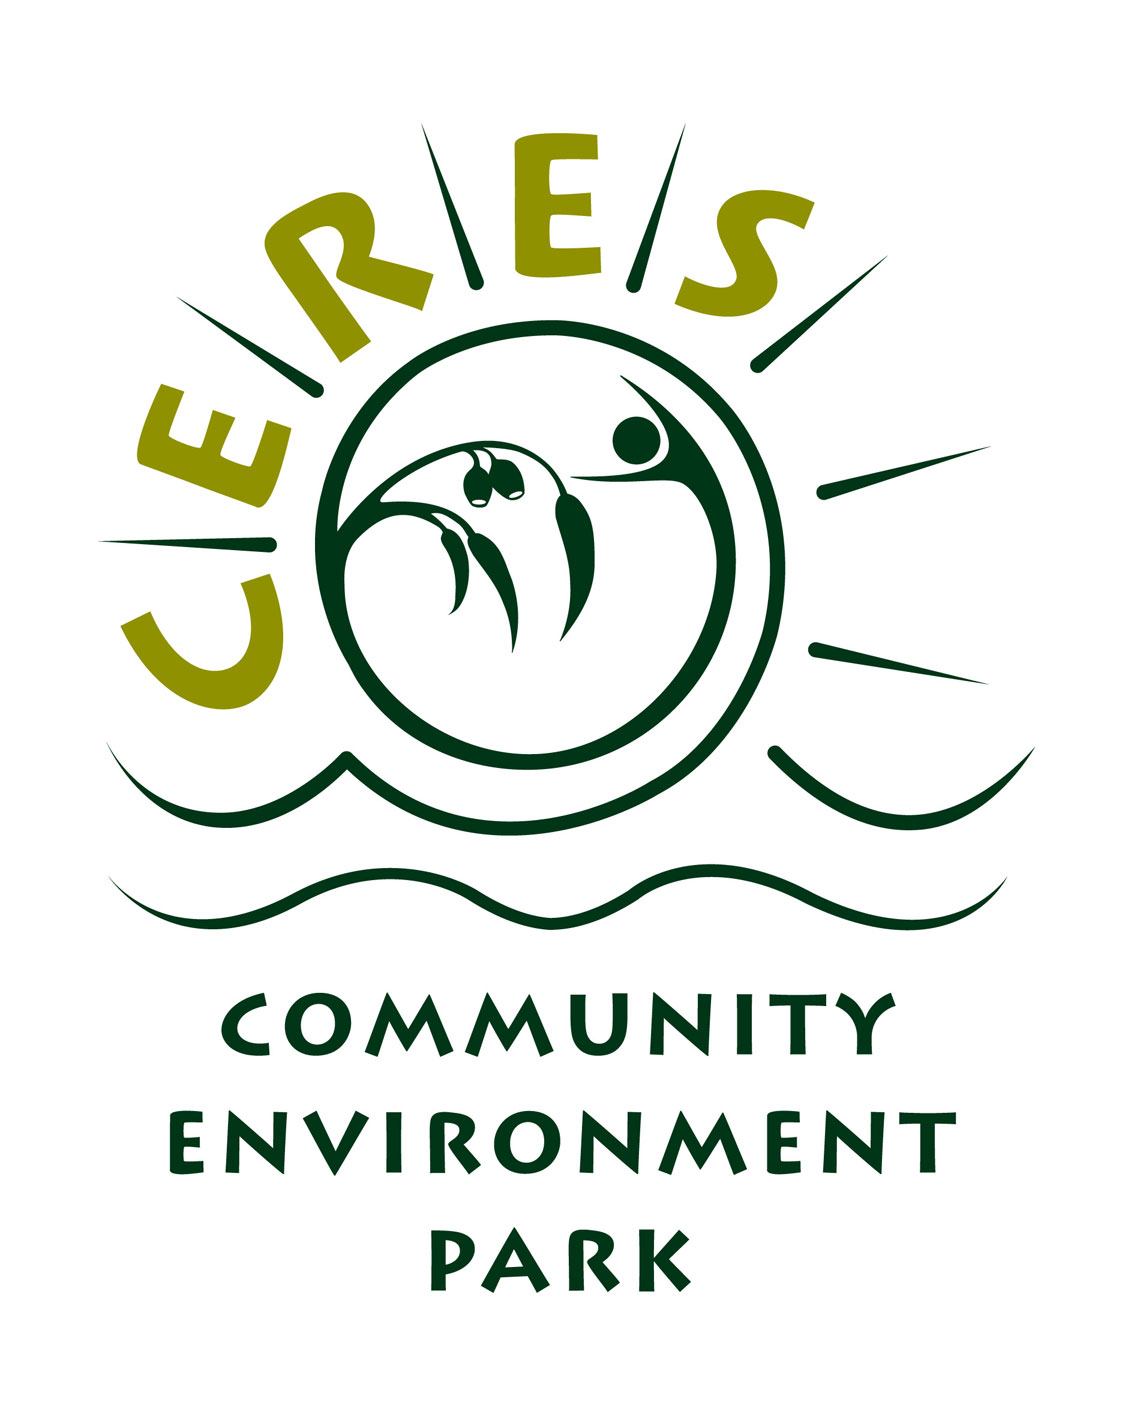 CERES Community Environment Park logo